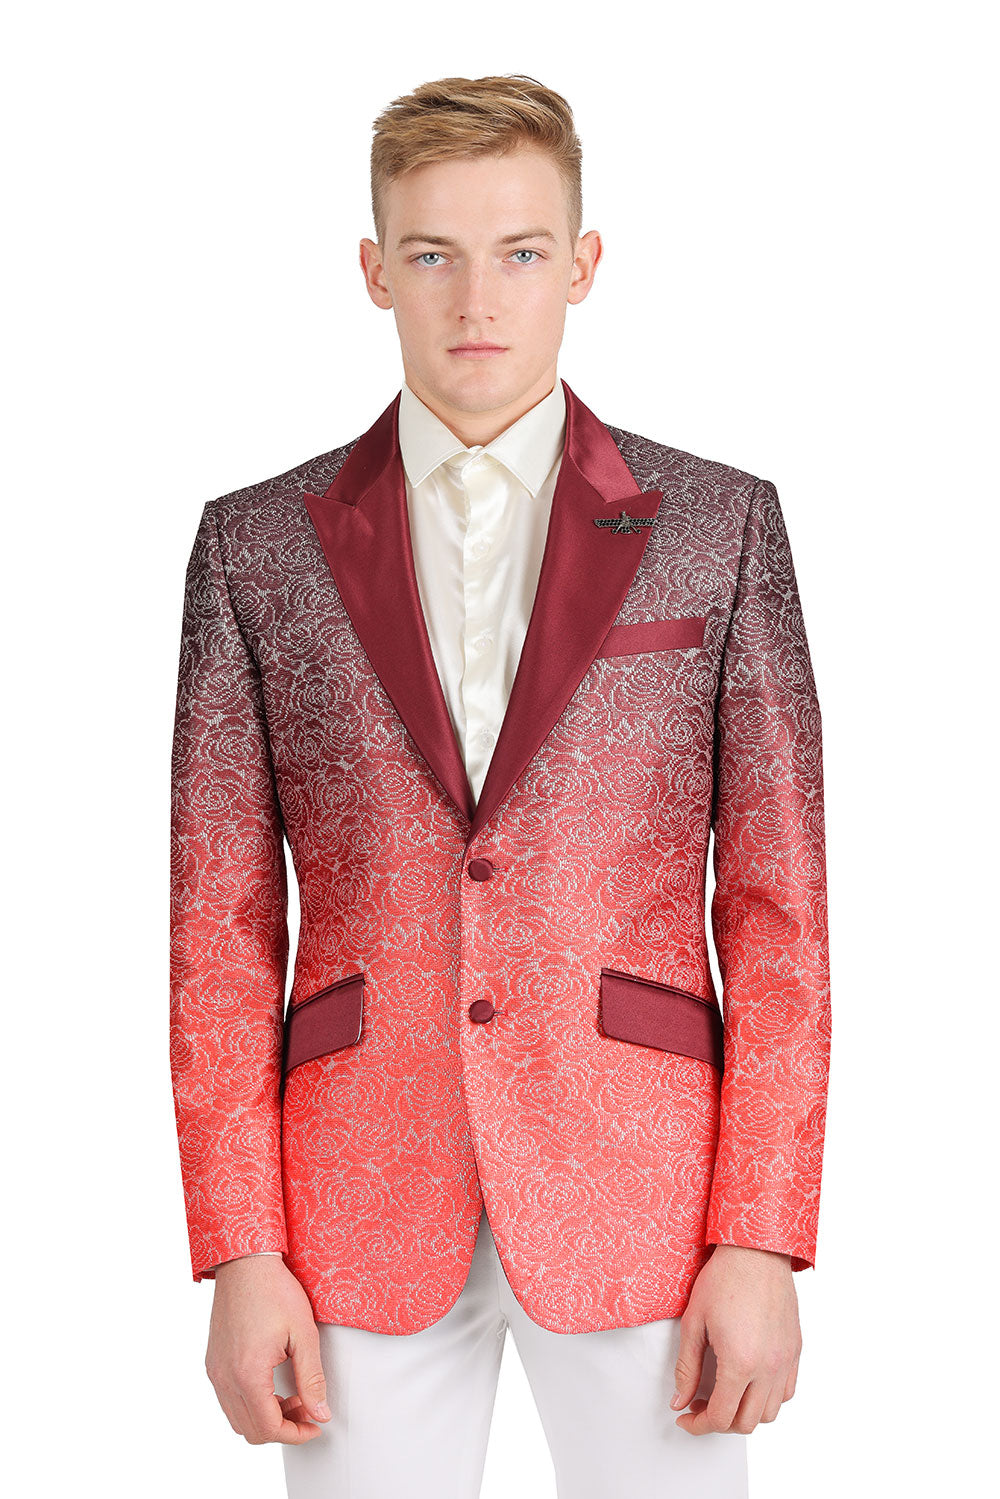 BARABAS Men's Two-Tone Floral Pattern Design Notched Blazer 3BL02 Red